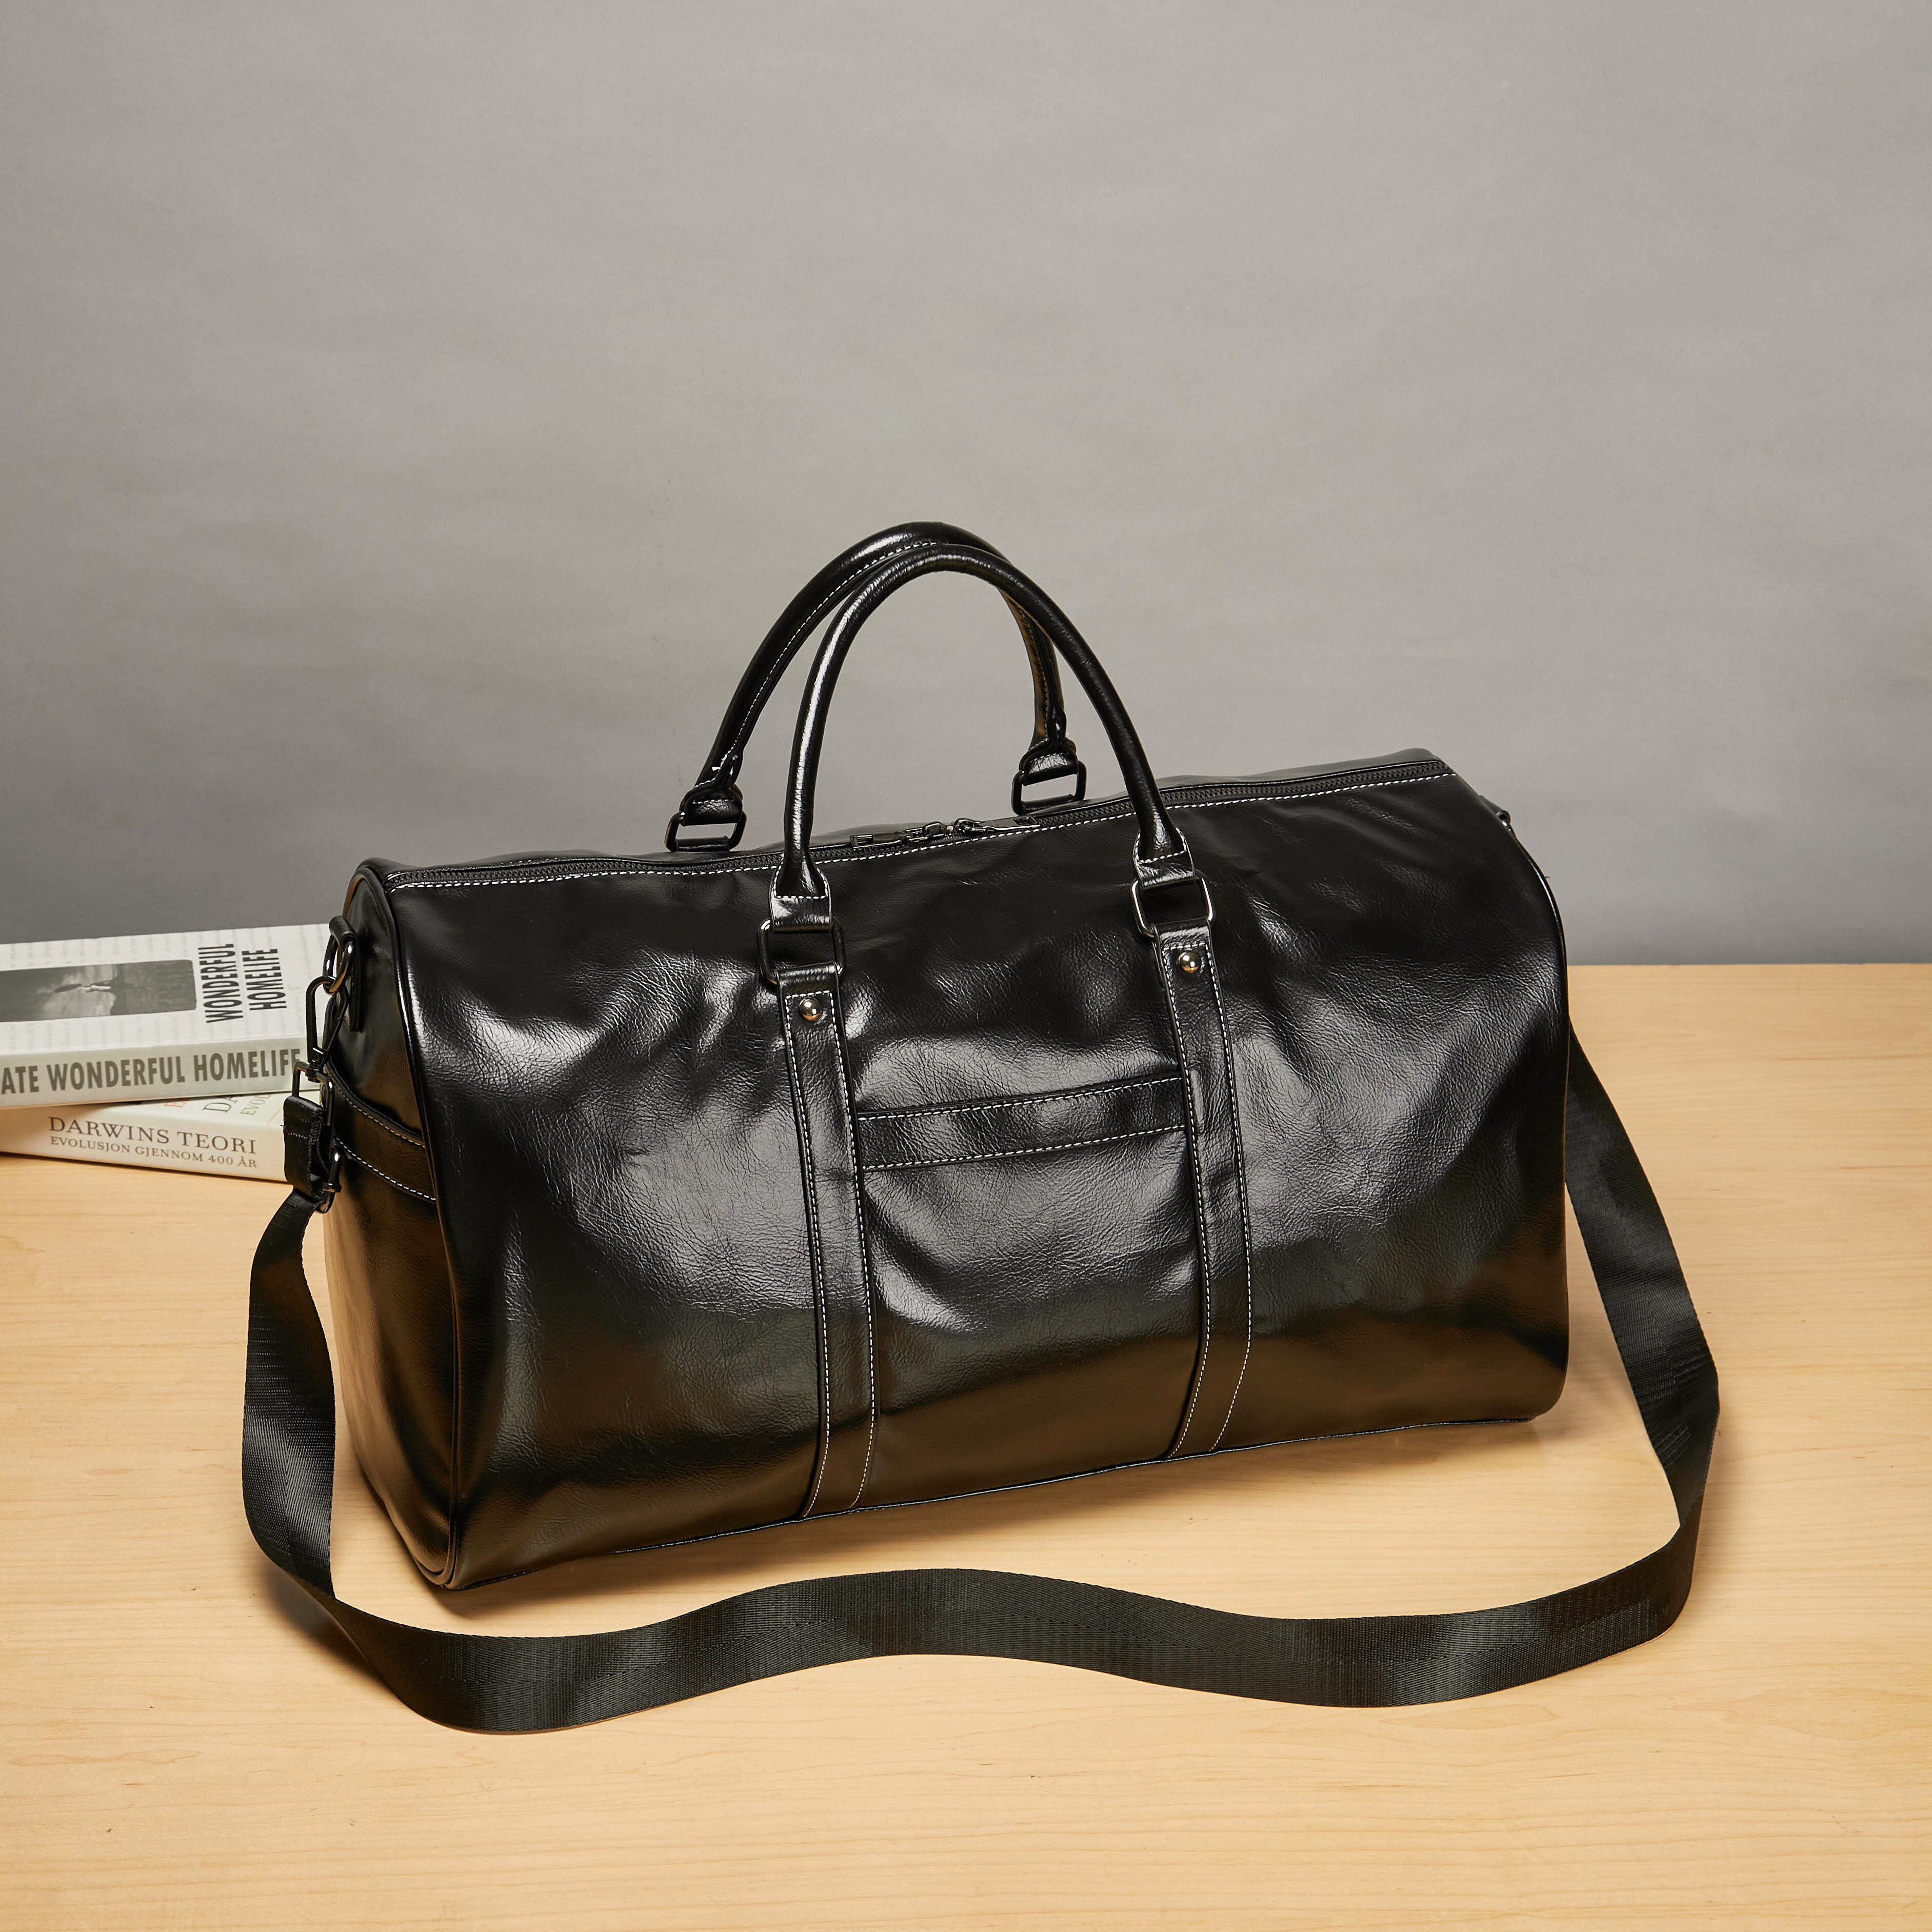 Women Travel Bags PU Leather Large Capacity Luggage Duffle Bag